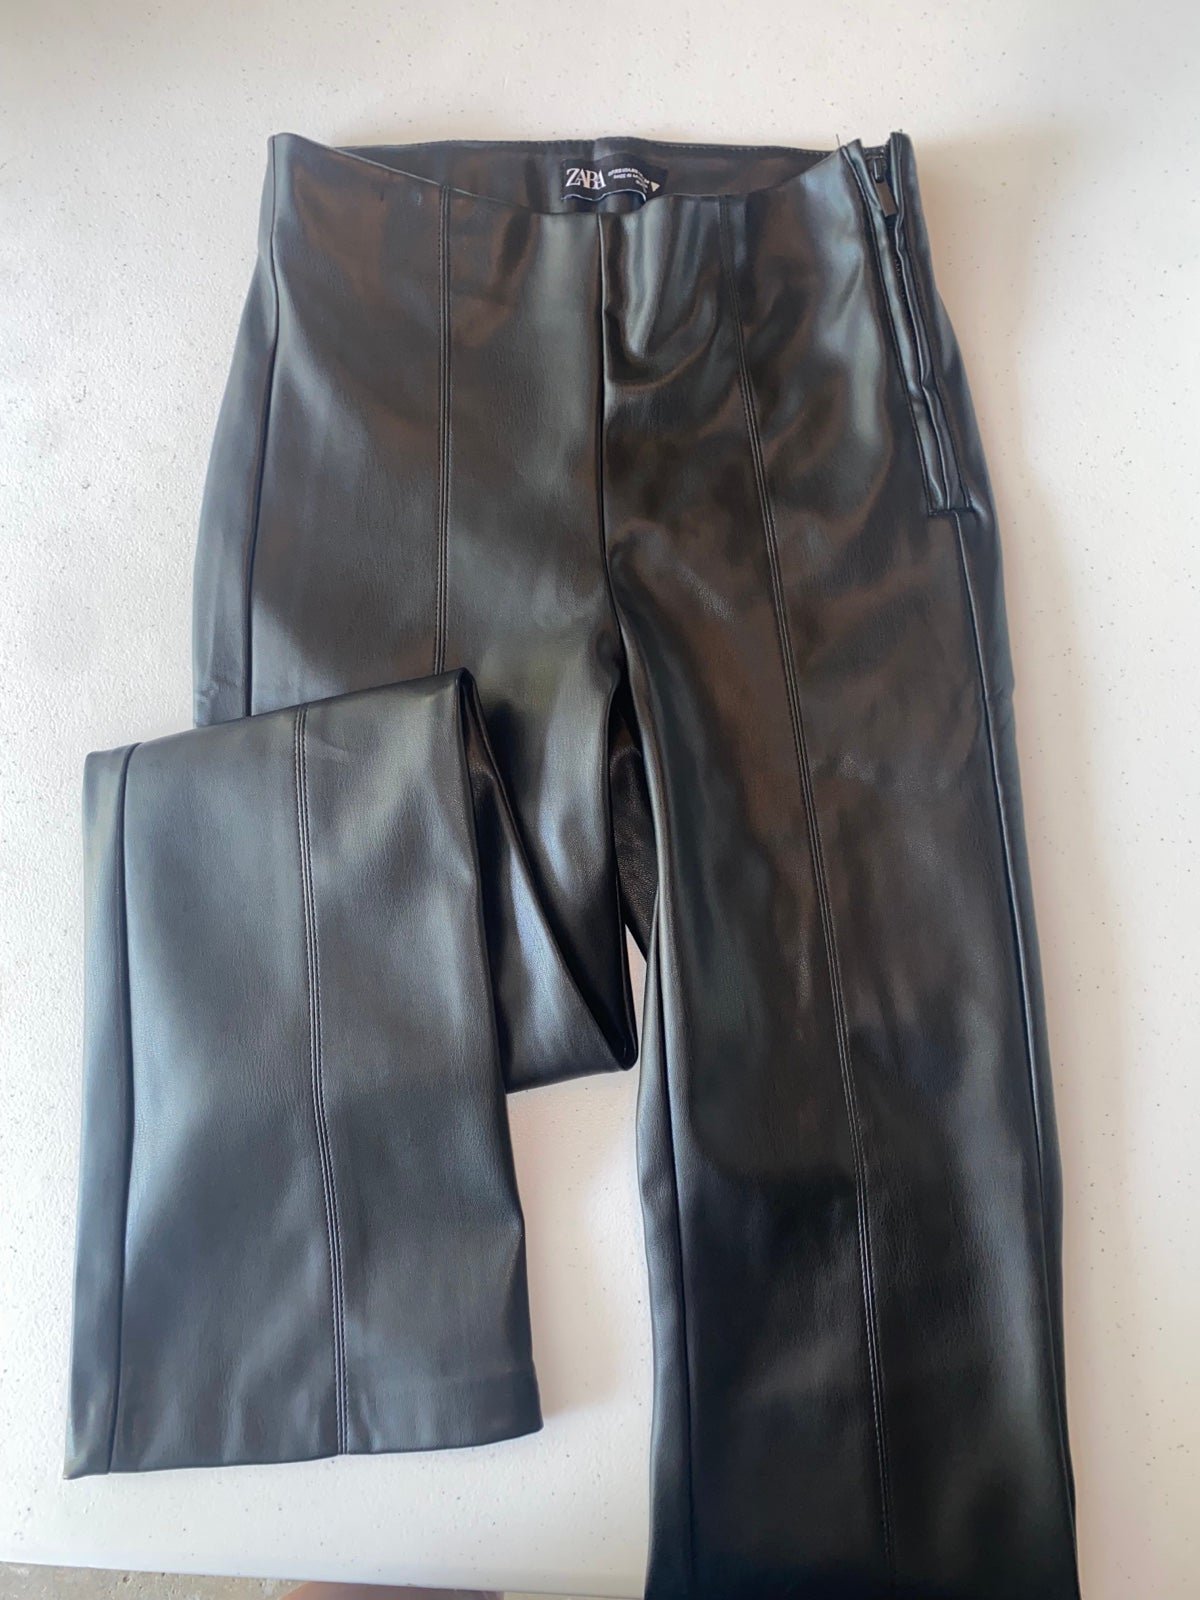 Promotions  ZARA leather pants nJRV5wyUR well sale